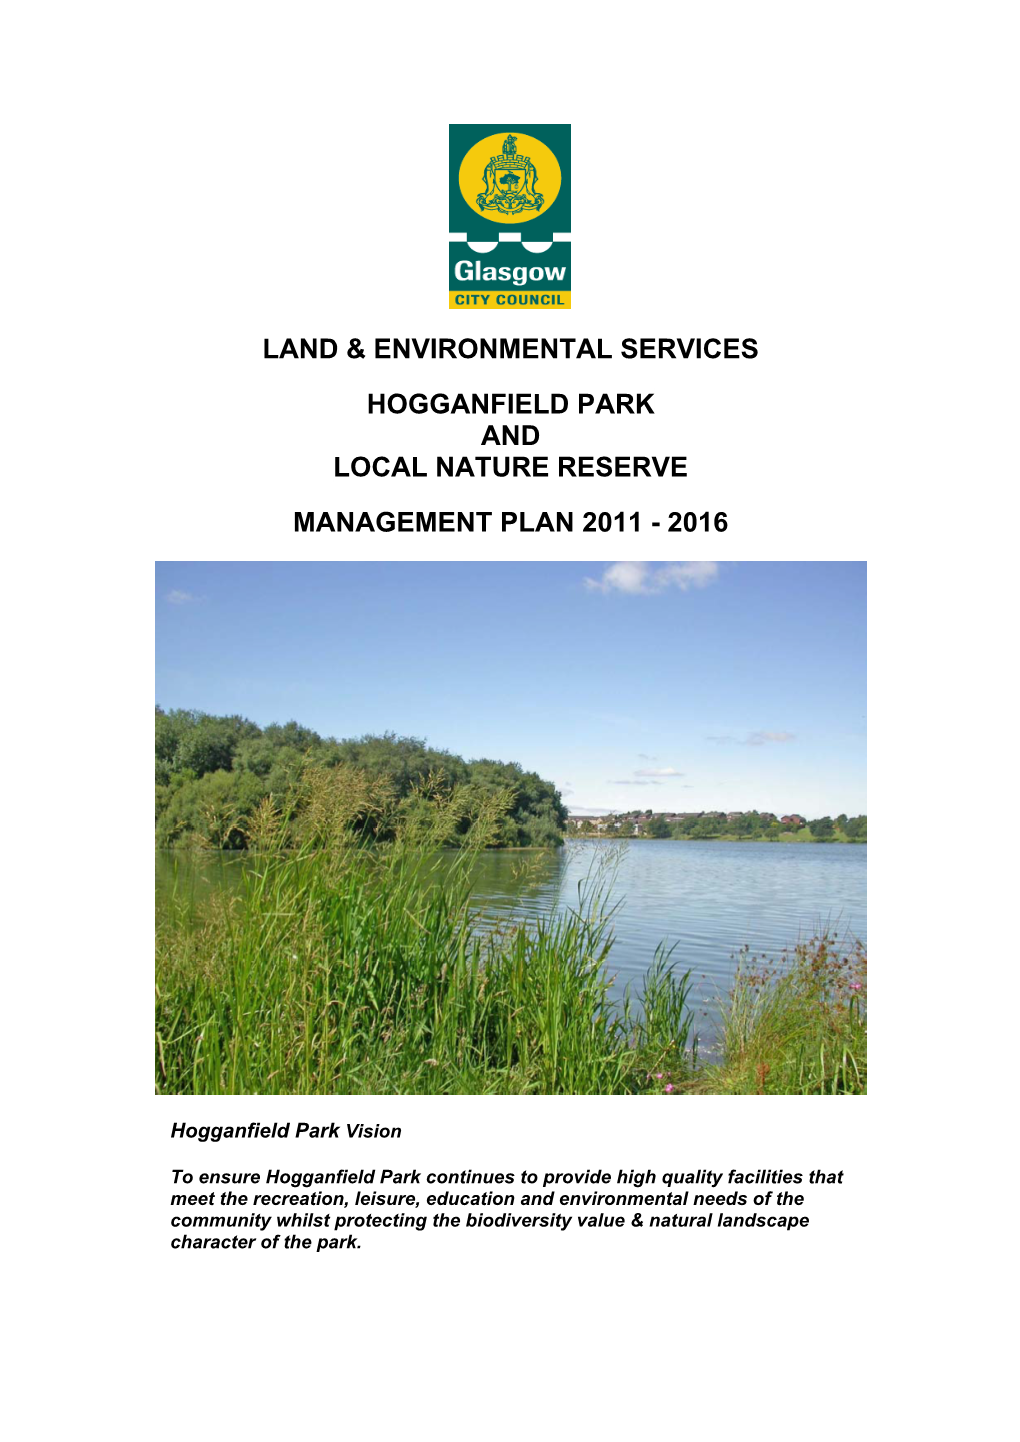 Land & Environmental Services Hogganfield Park